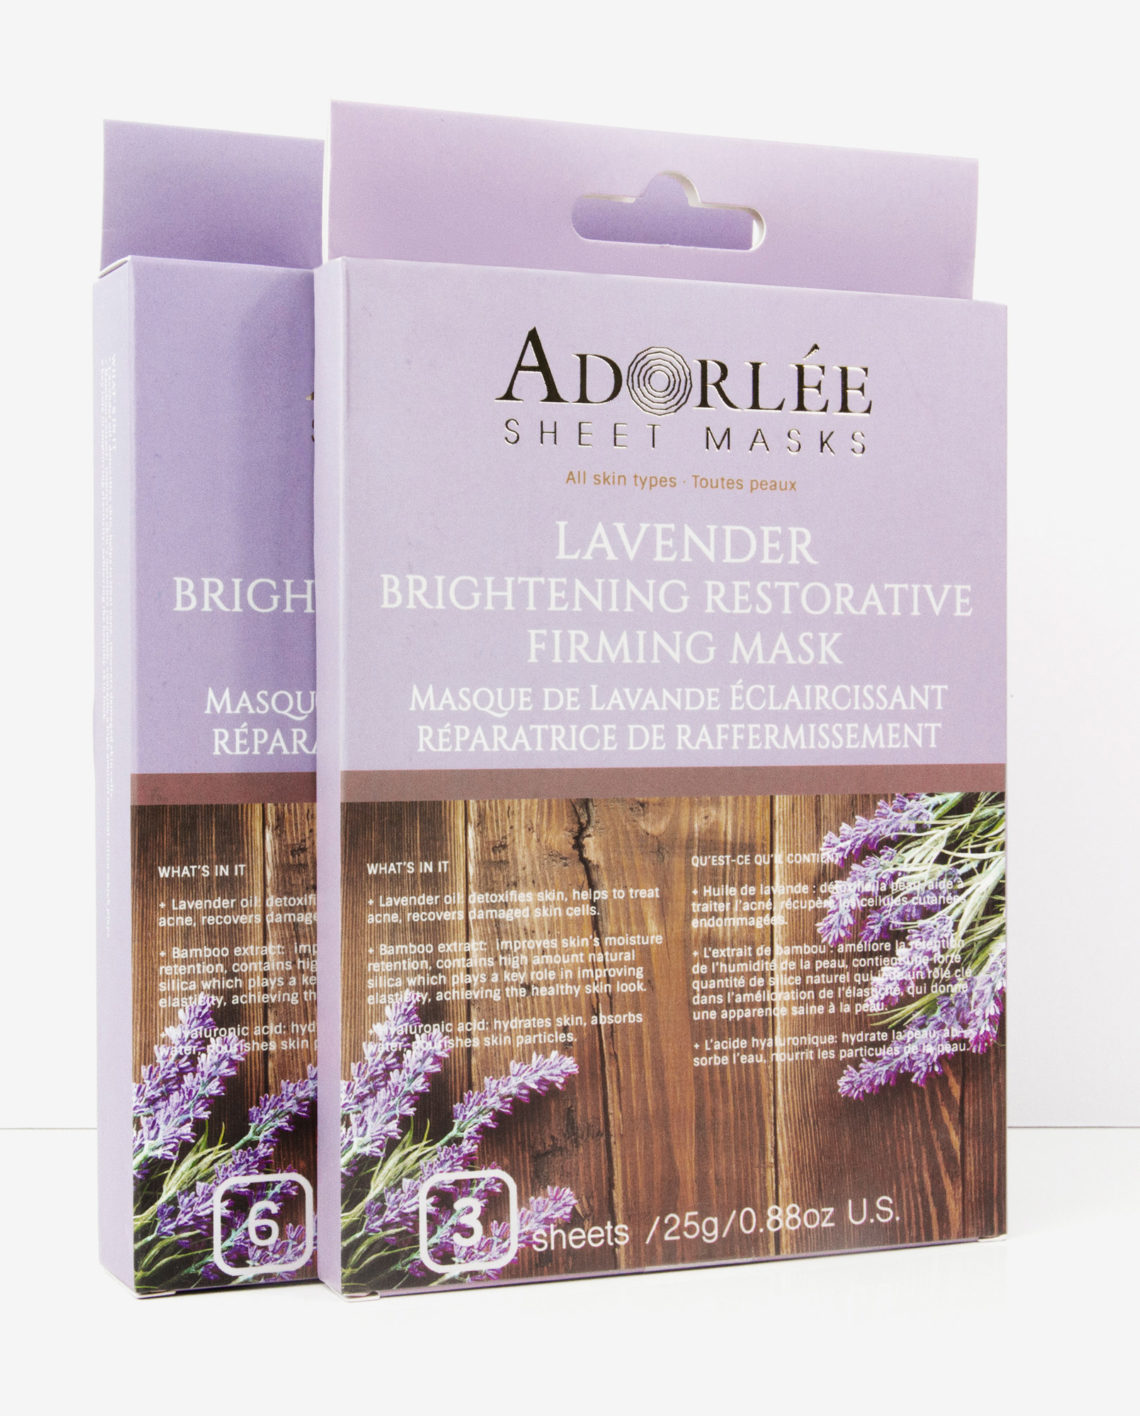 ADORLÉE Lavender Brightening Restorative Firming Mask 1